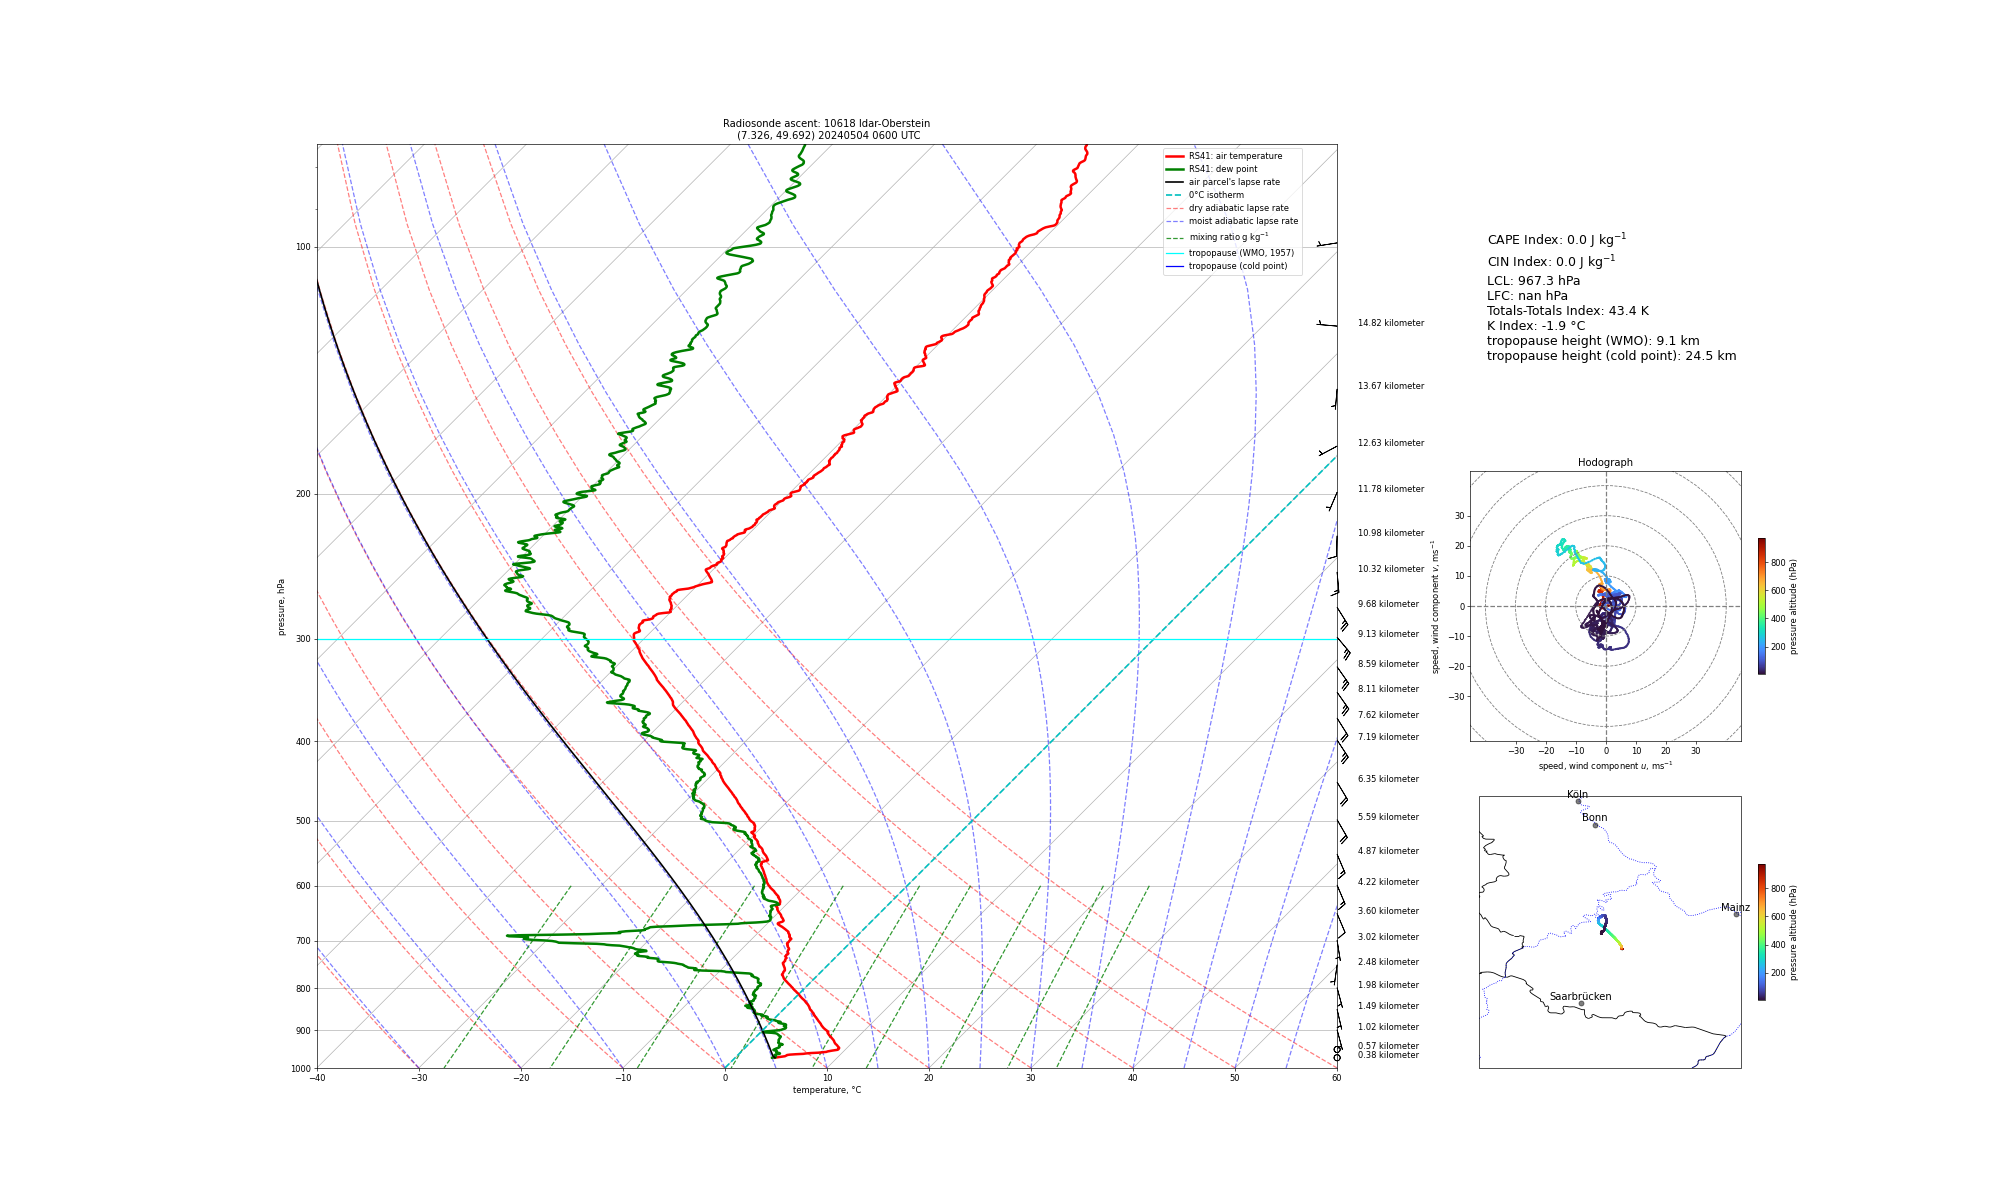 Visualisation of the radiosounding profile at Idar-Oberstein at 0600 UTC